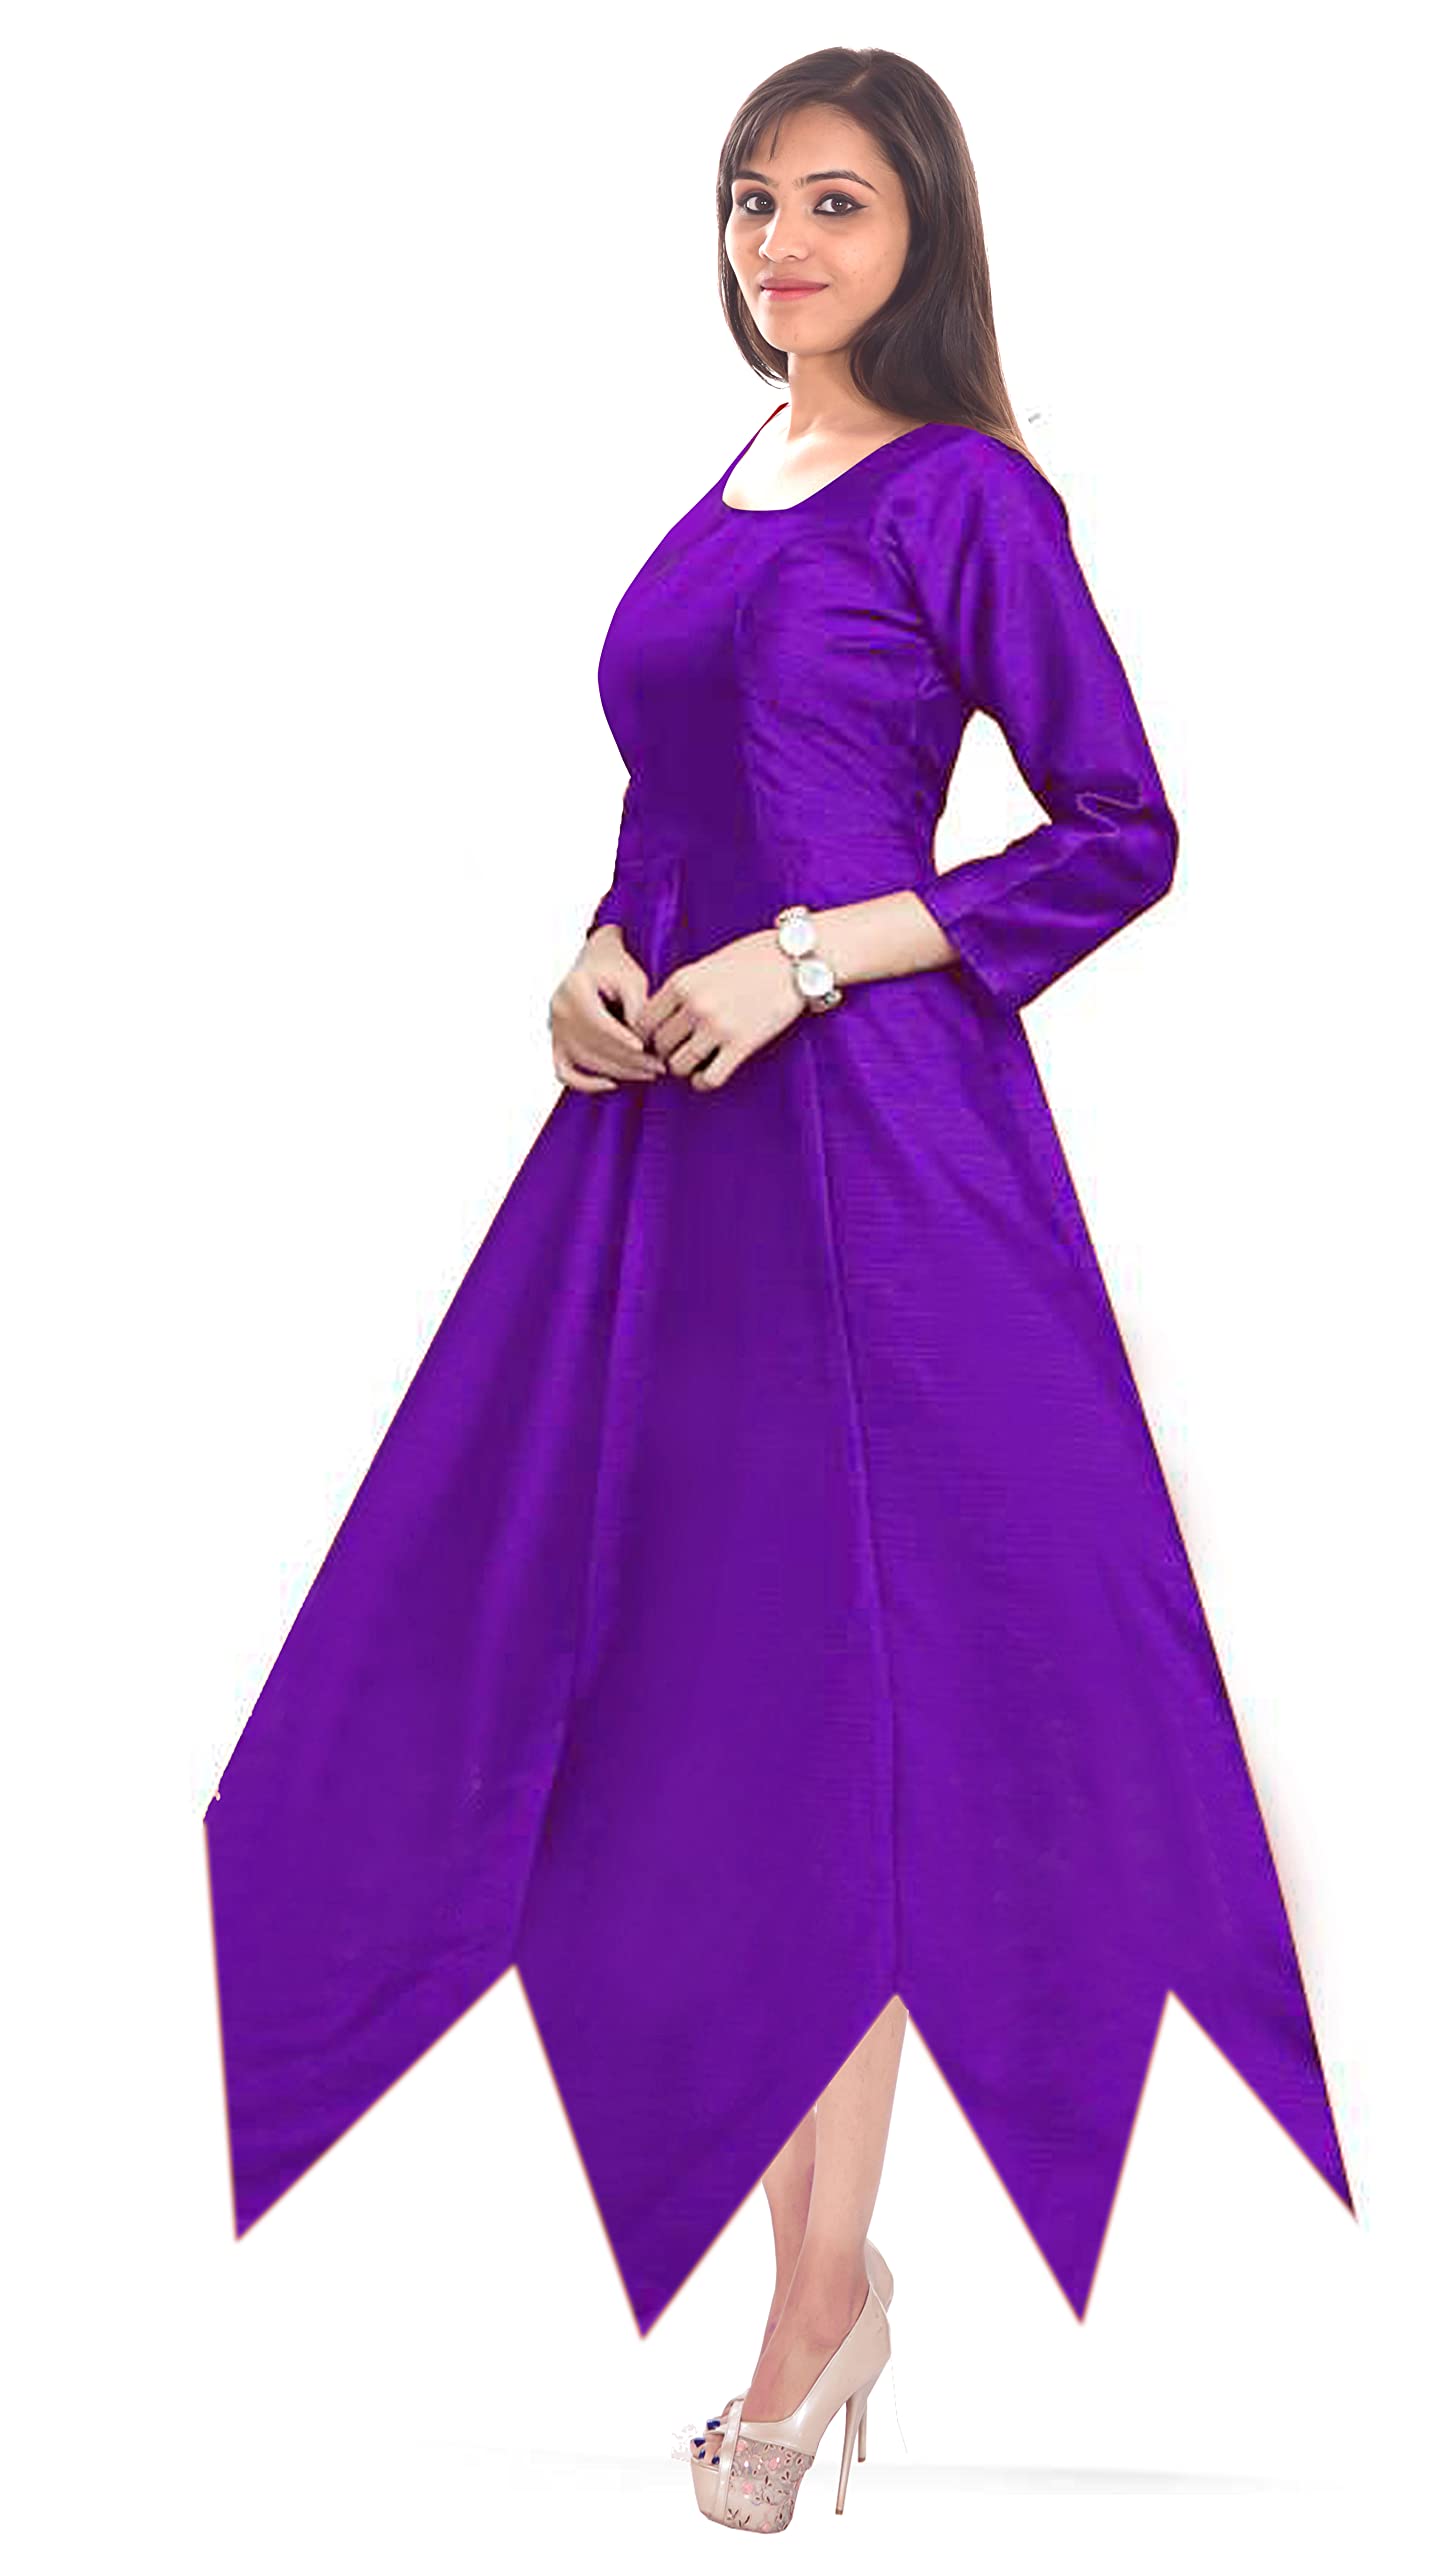 Lakkar haveli Beautiful Women's Tunic Art Dupien Poly Silk Handkerchief Dress Top Casual Frock Suit Purple Color Wedding Wear Plus Size (Medium)